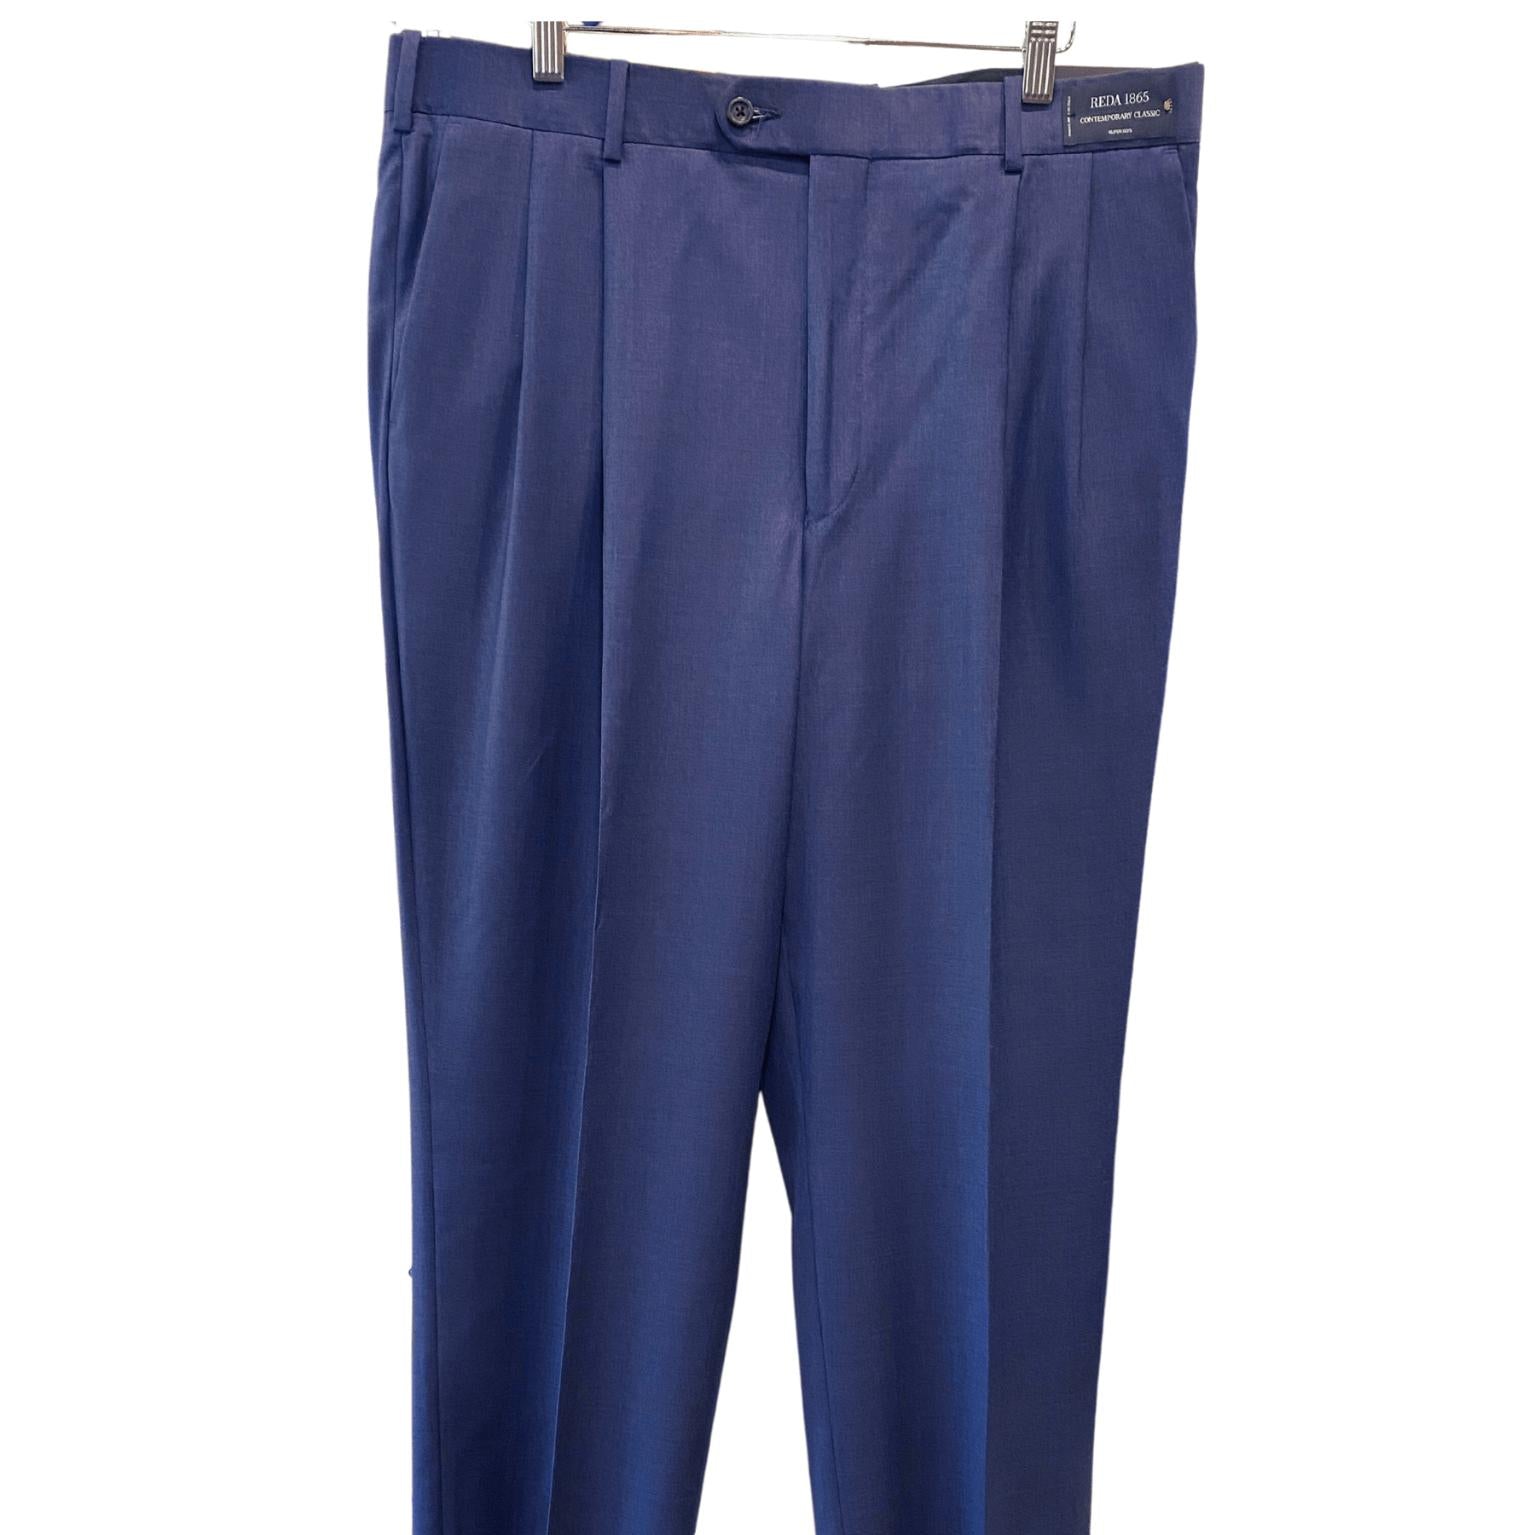 Coppley Men's Pants Blue / 36 Coppley Pleated Dress Trousers